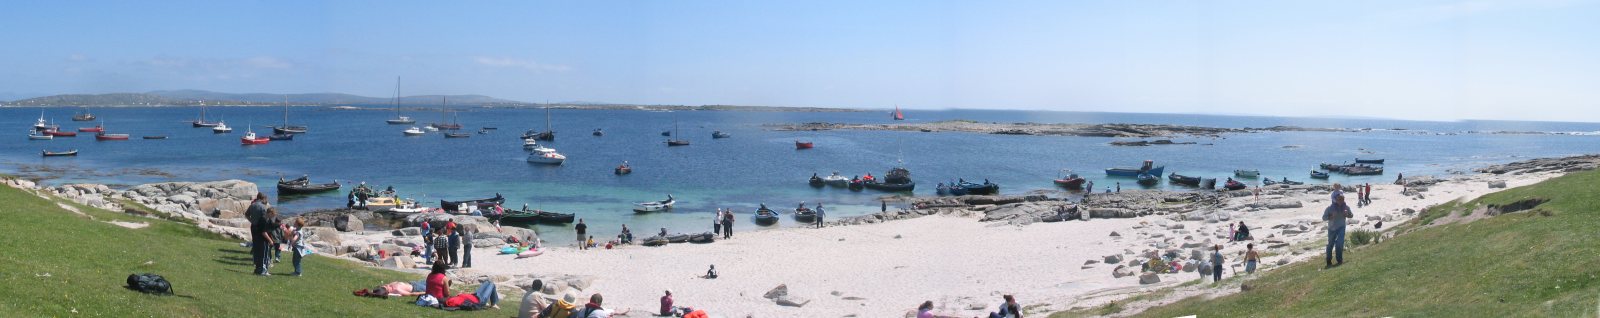 July `16 - The beach on Inis Mhic Dara.